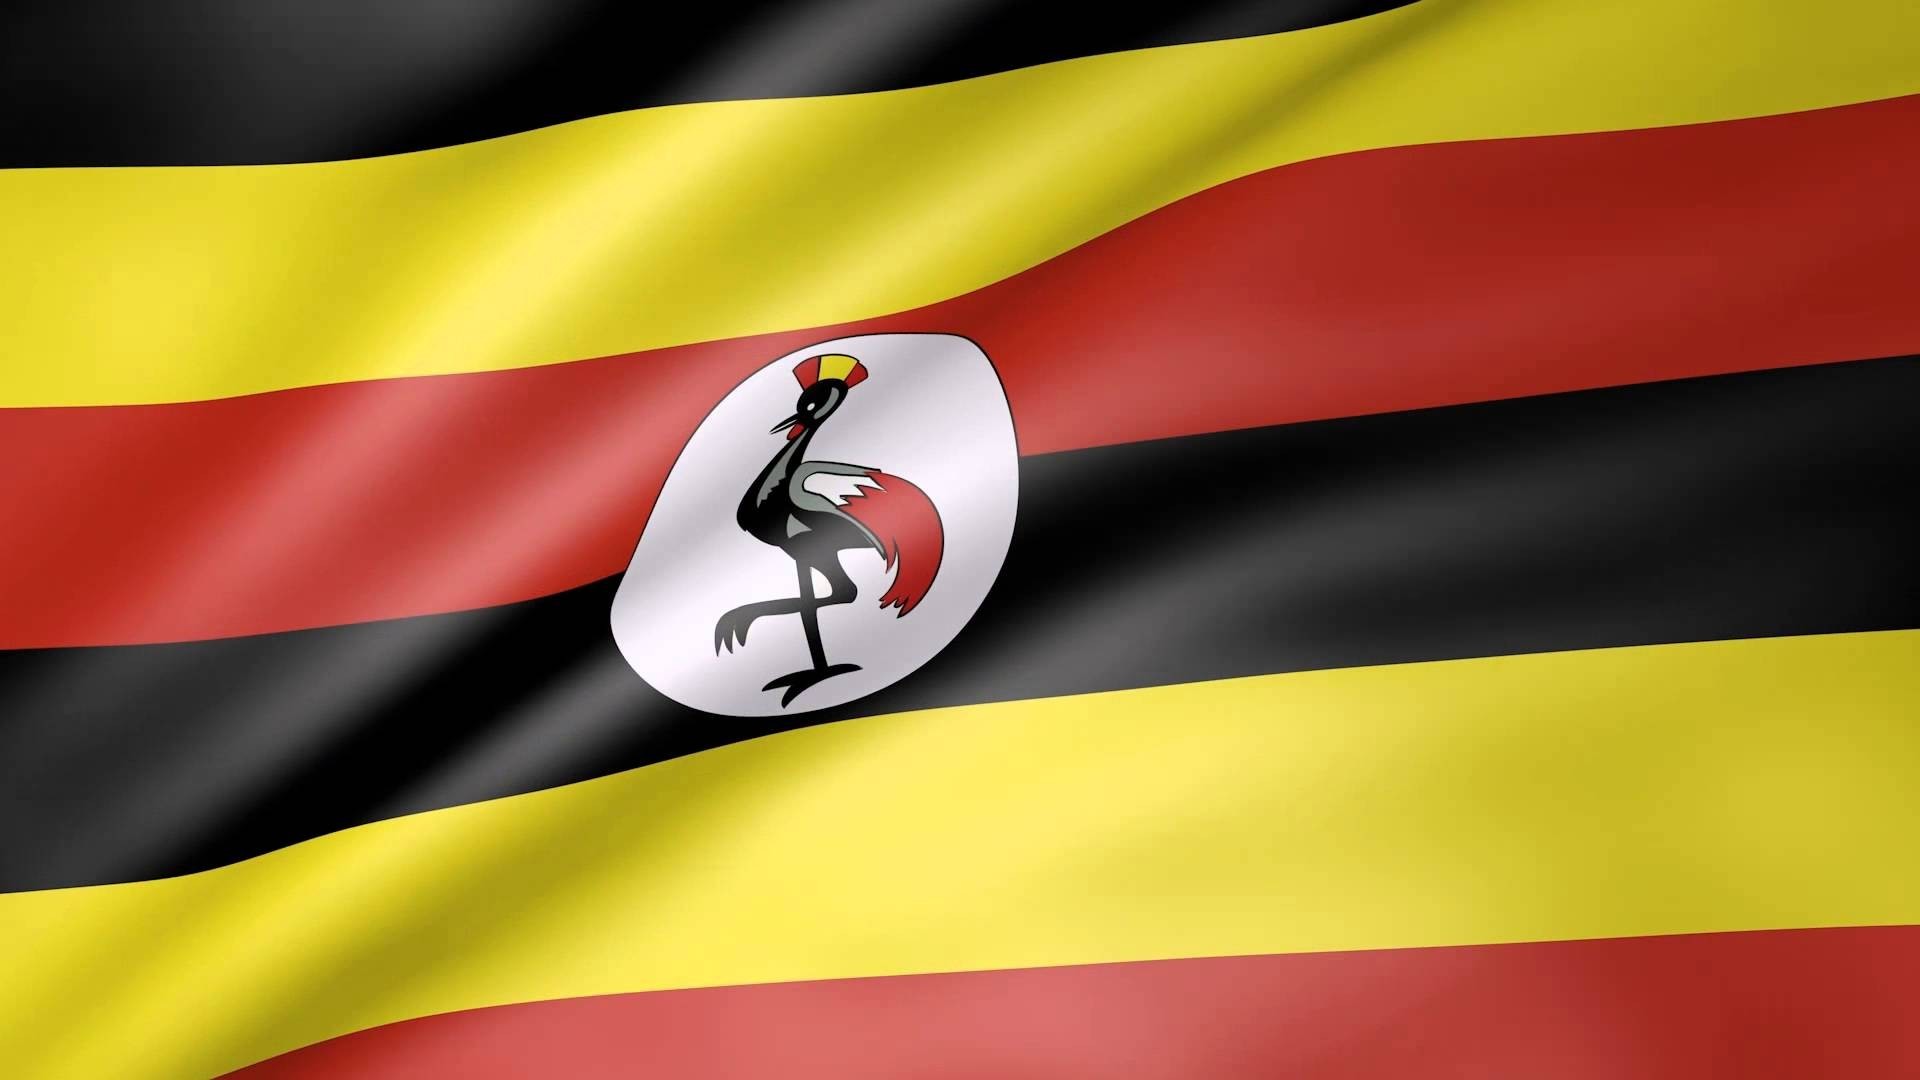 1920x1080 Flag of Uganda wallpaper